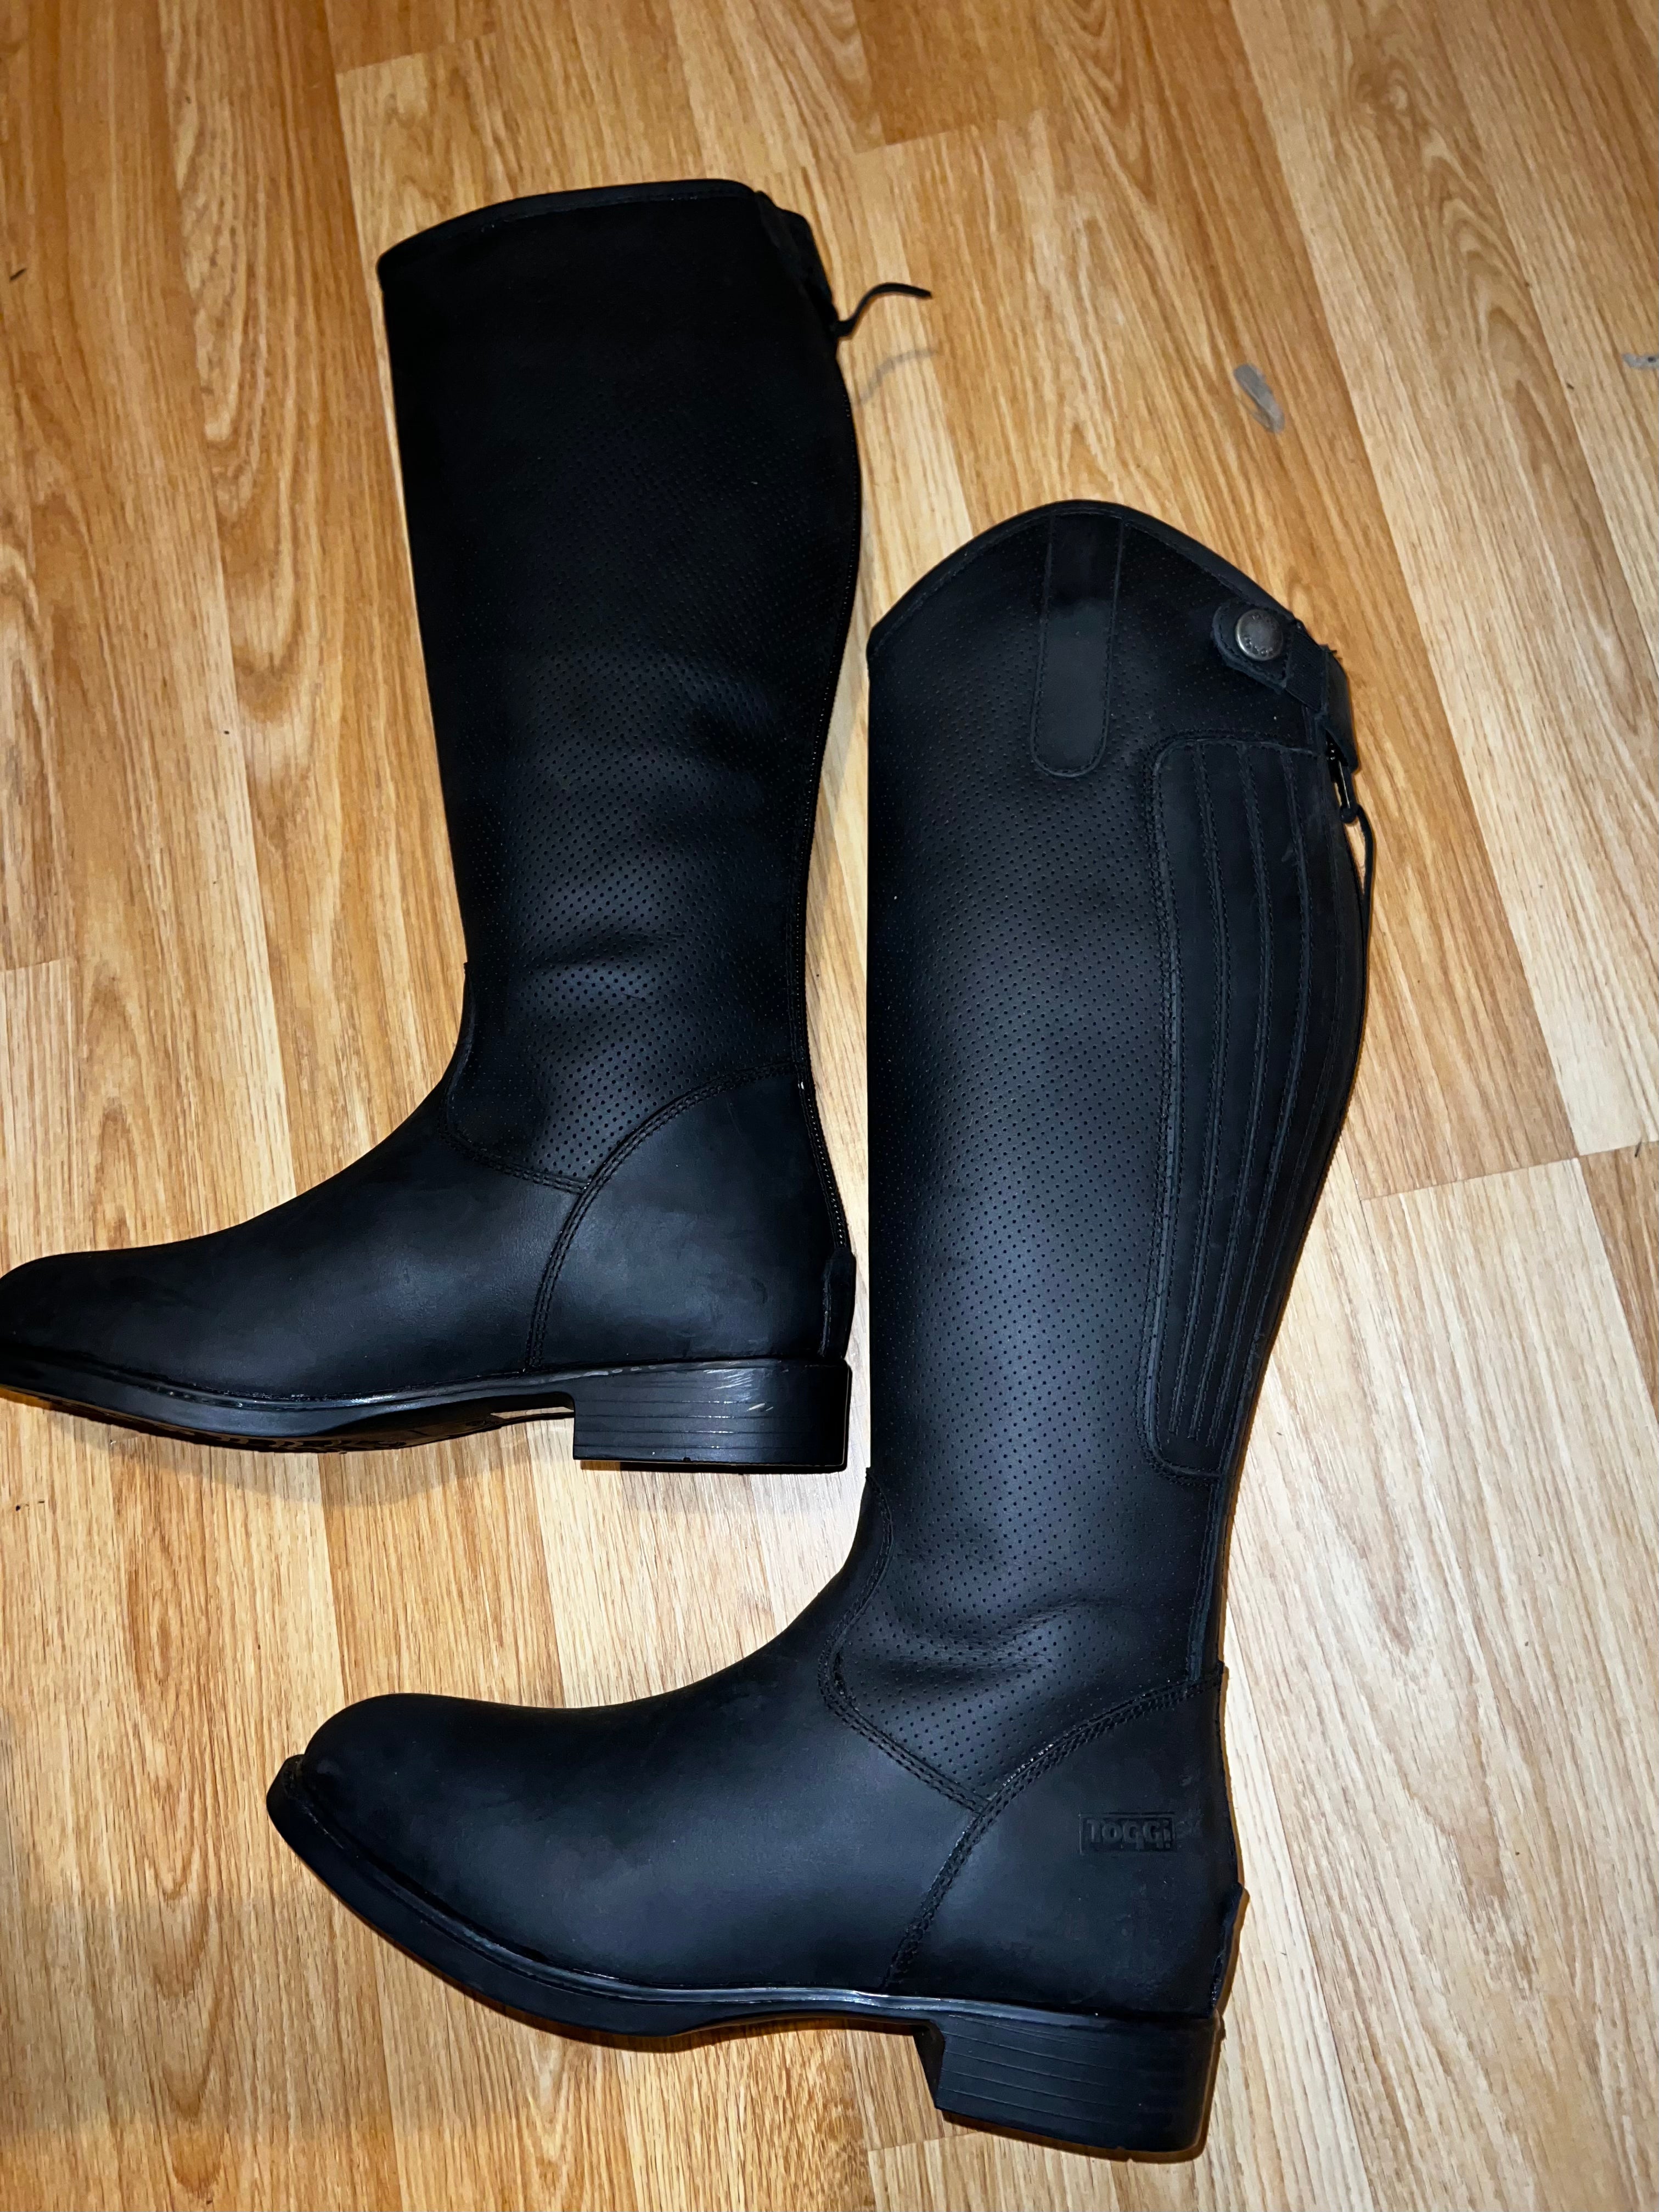 Toggi Tuscon Long Riding Boots - Junior Size 2 - 3 - 4 or 5